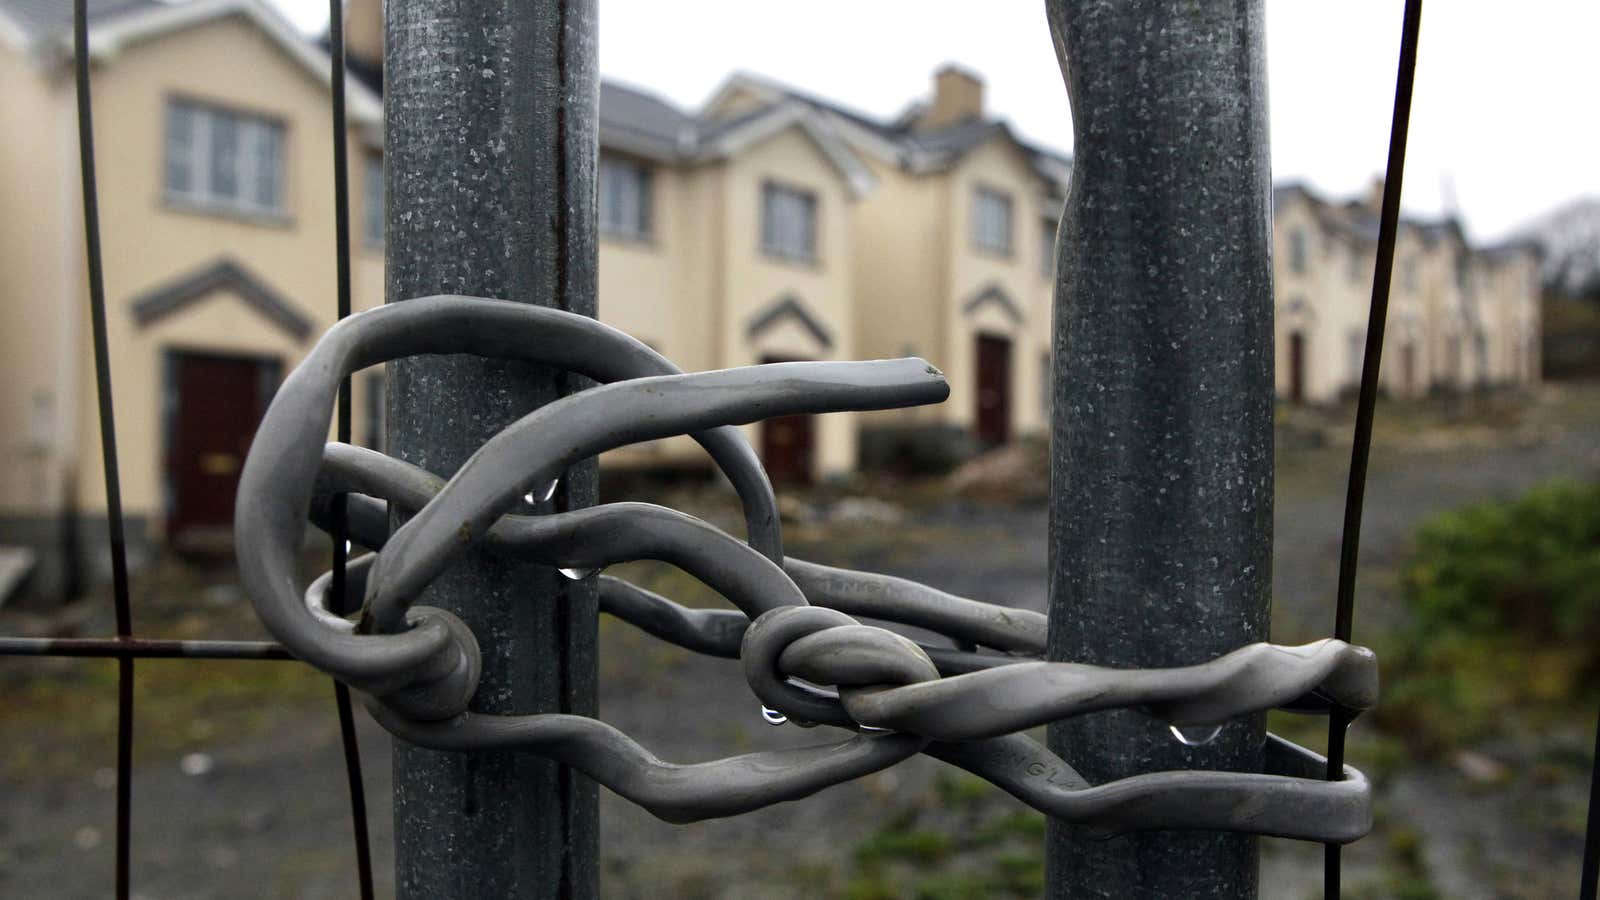 Despite rosier economic news, Ireland’s housing market is still a mess.